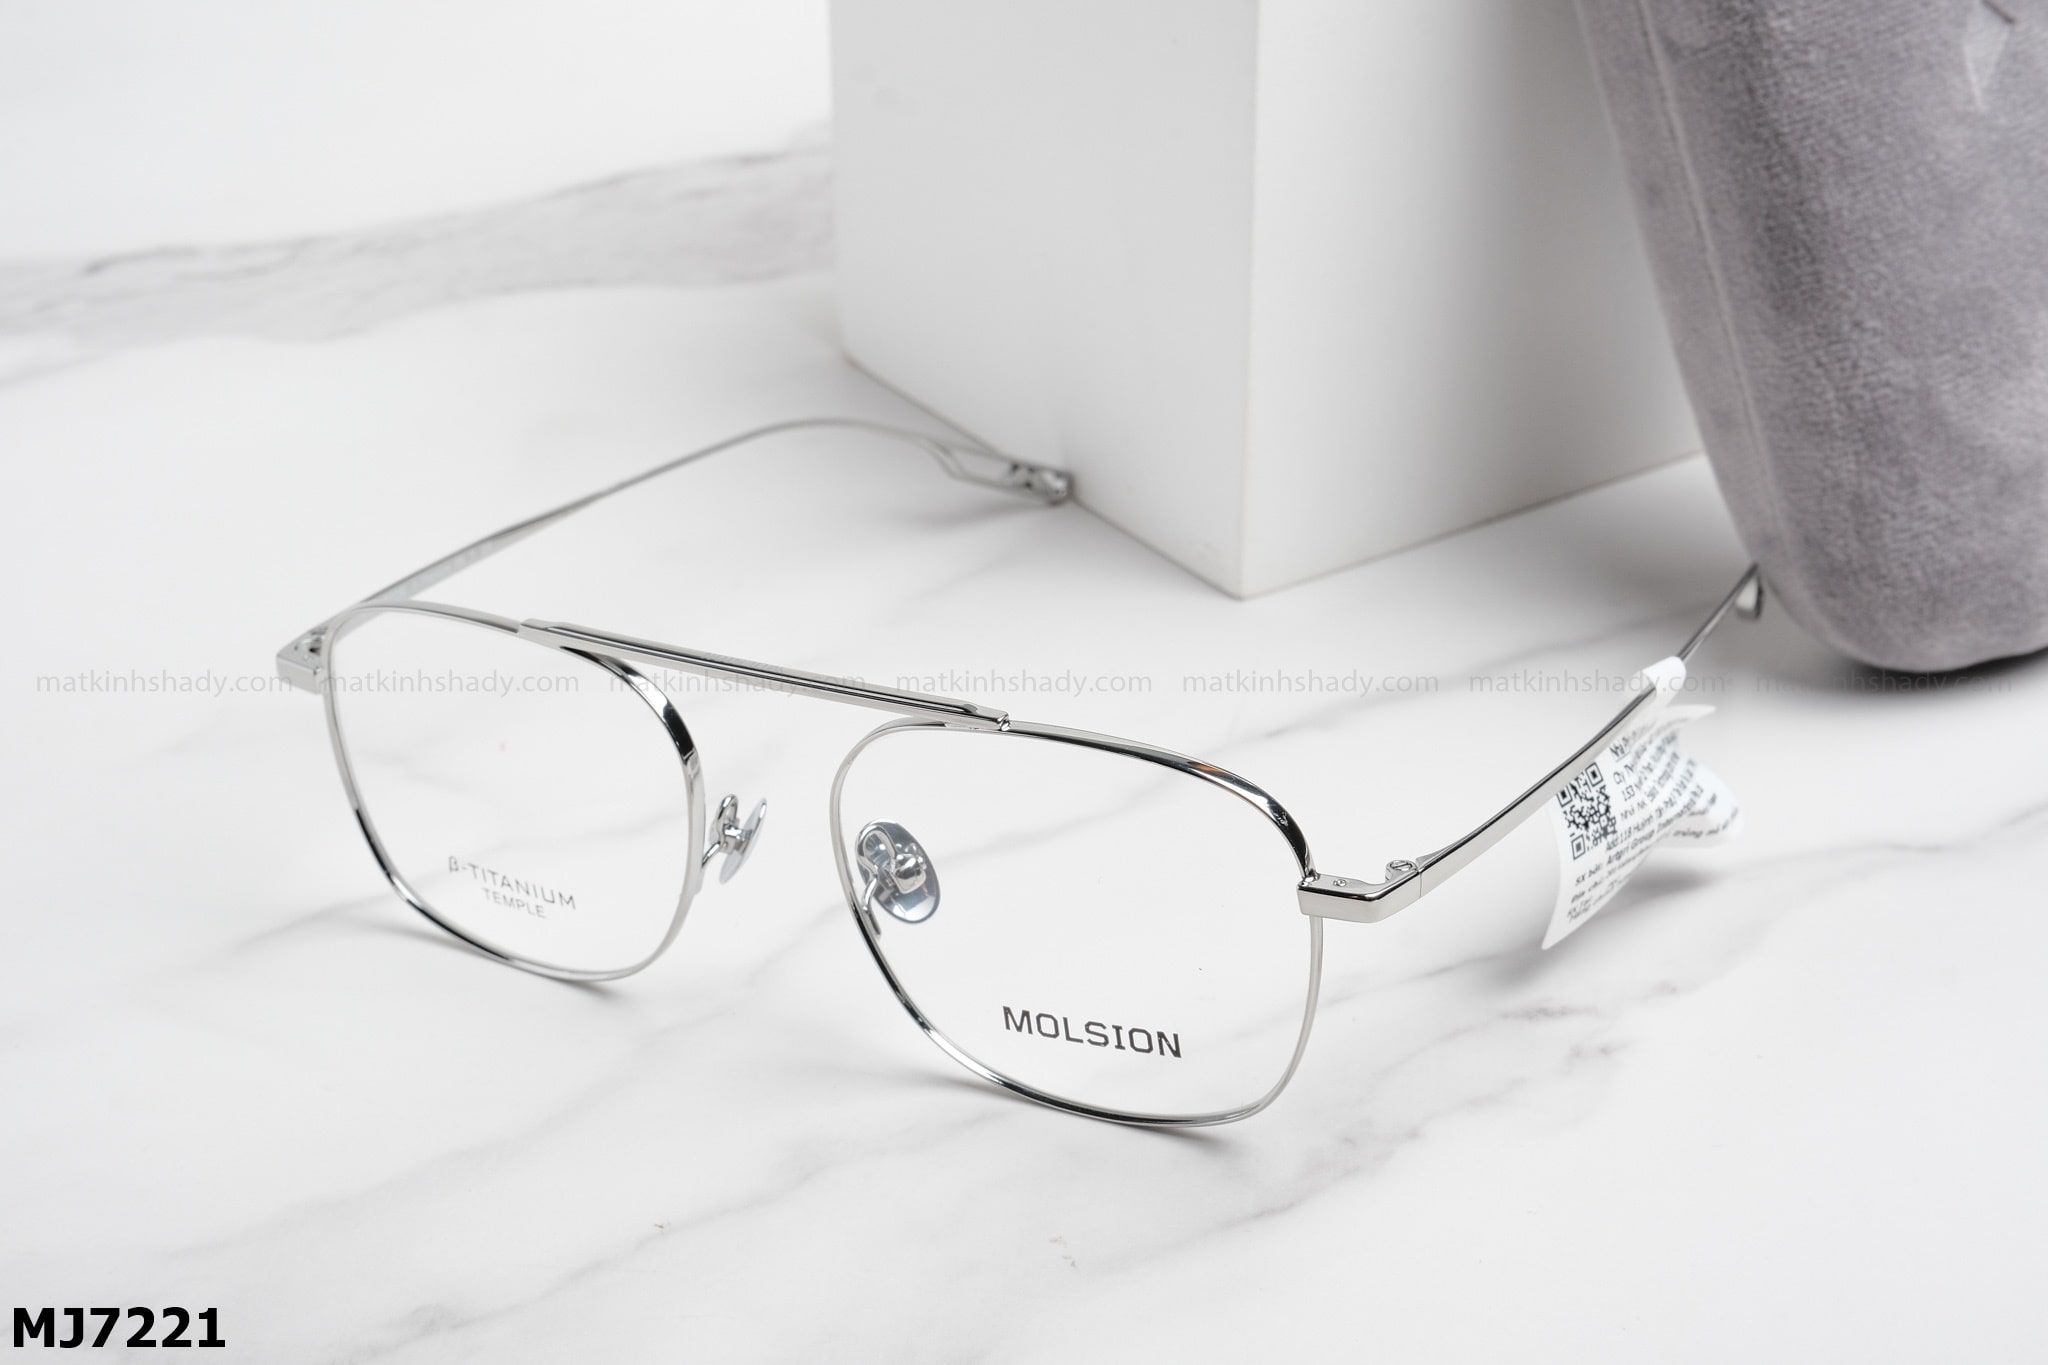  Molsion Eyewear - Glasses - MJ7221 